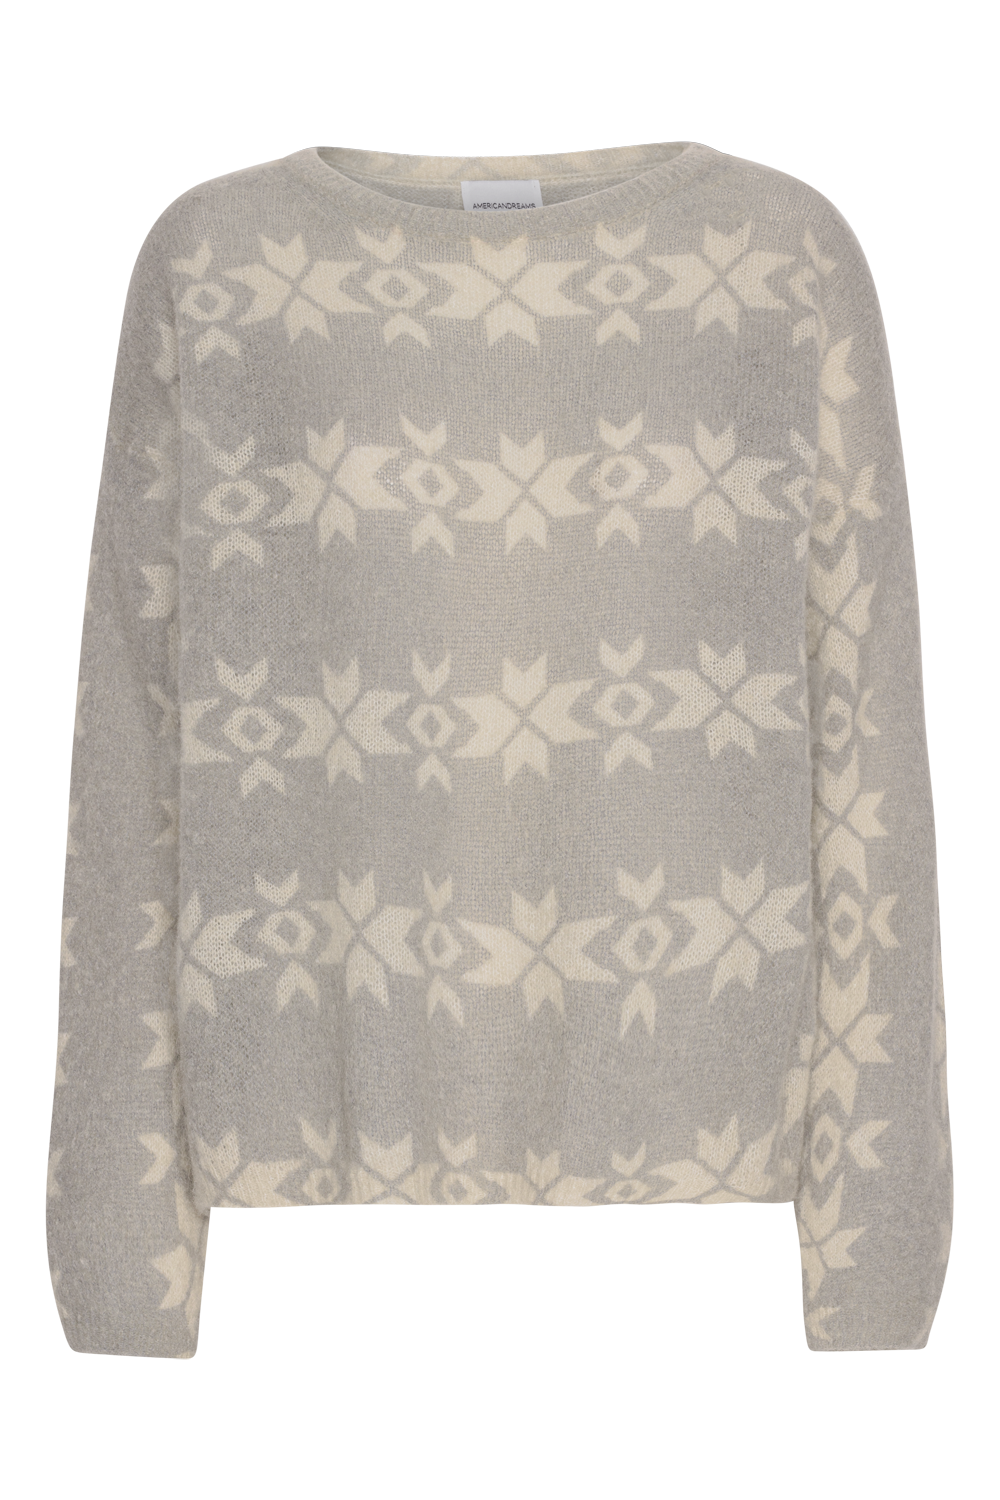 Eva Nordic Pullover Light Grey With White Print - Sample